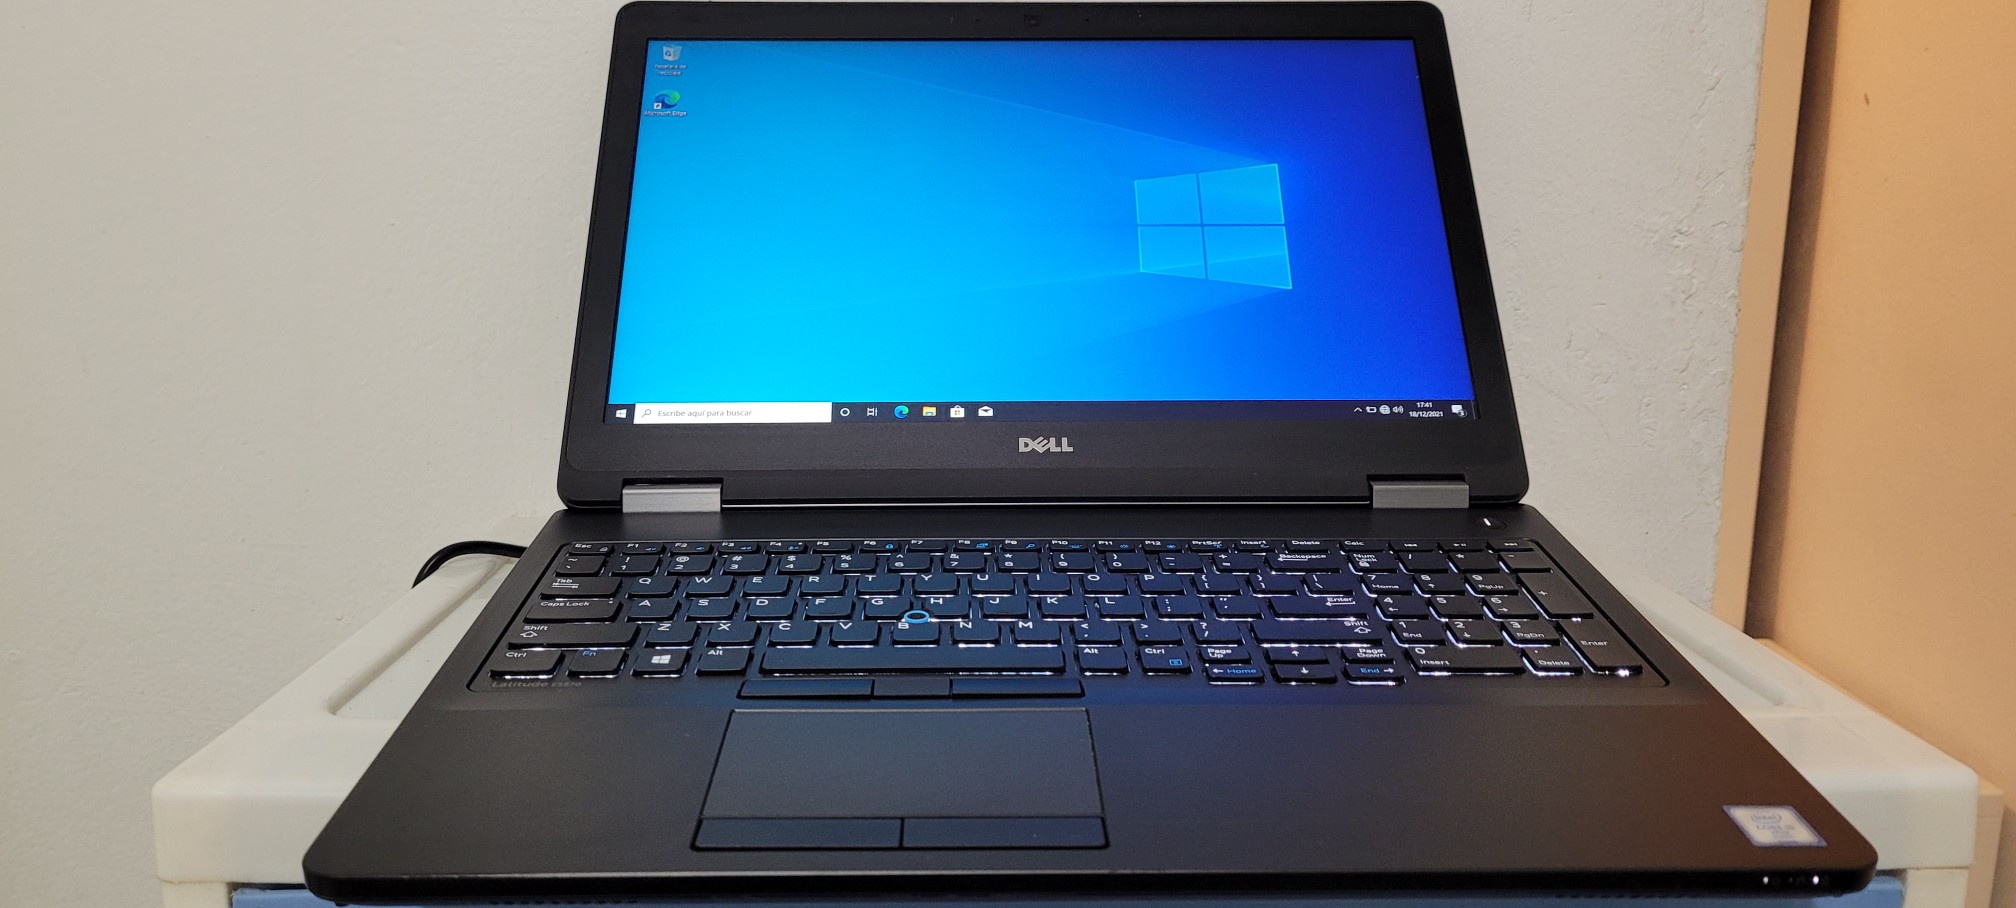 computadoras y laptops - Dell 17 Pulg Core i7 Ram 8gb Disco 1000gb Video 4gb